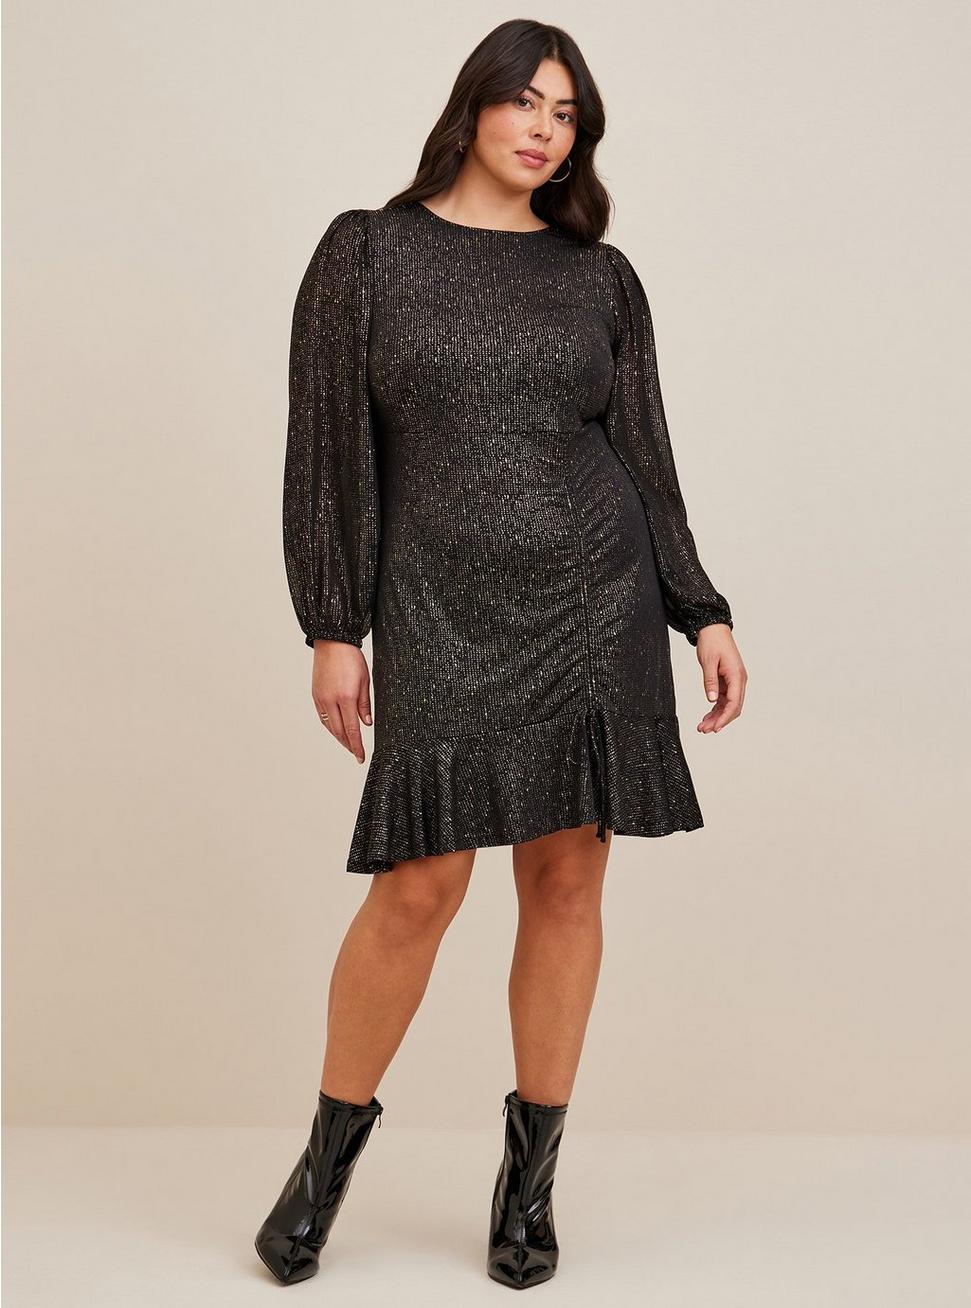 Mini Studio Knit Ruched Dress, BLACK GOLD, hi-res